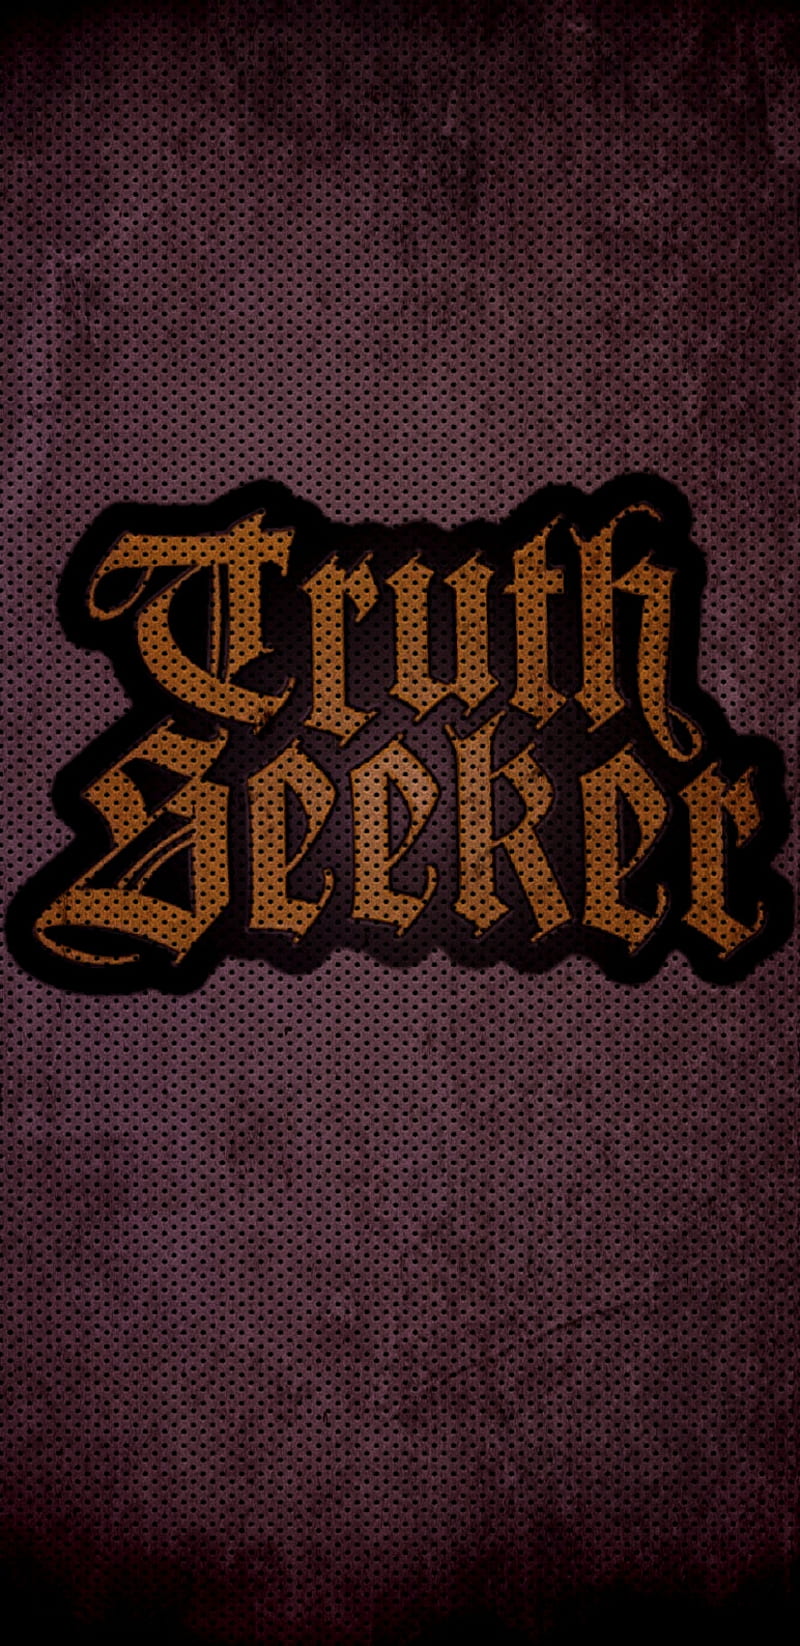 Truth seeker, conspiracy, fake news, grunge, illuminati, new world order, question everything, HD phone wallpaper